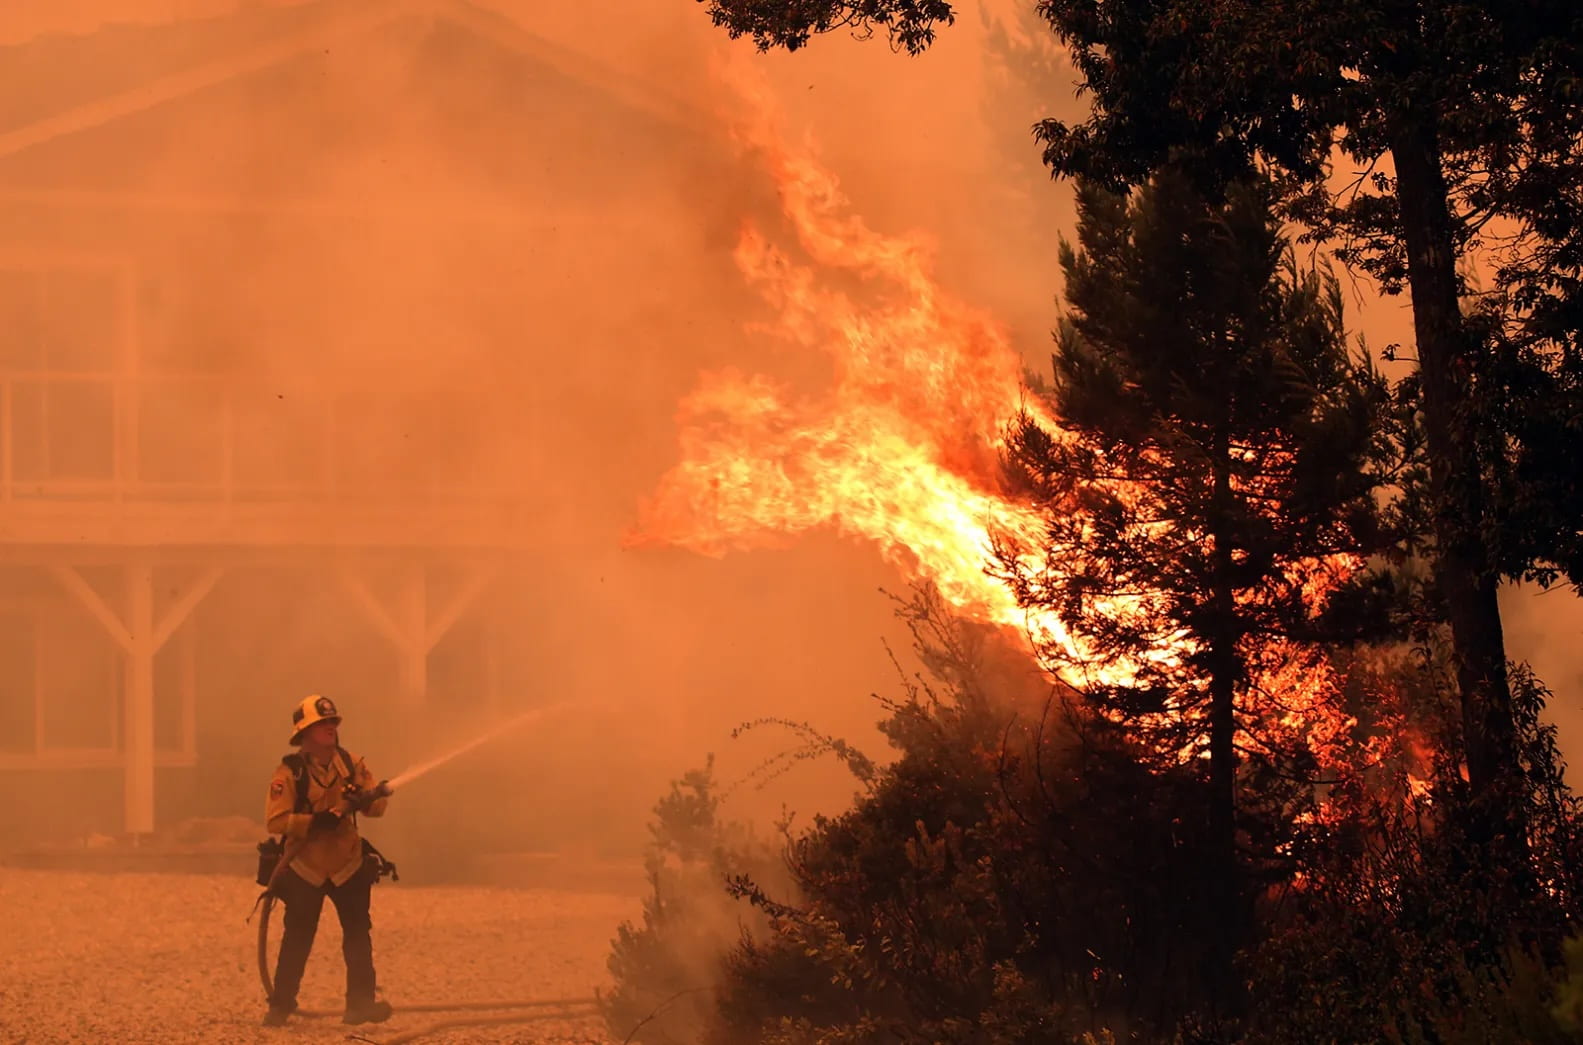 UC Santa Cruz researchers study impacts of CZU wildfires on local streams